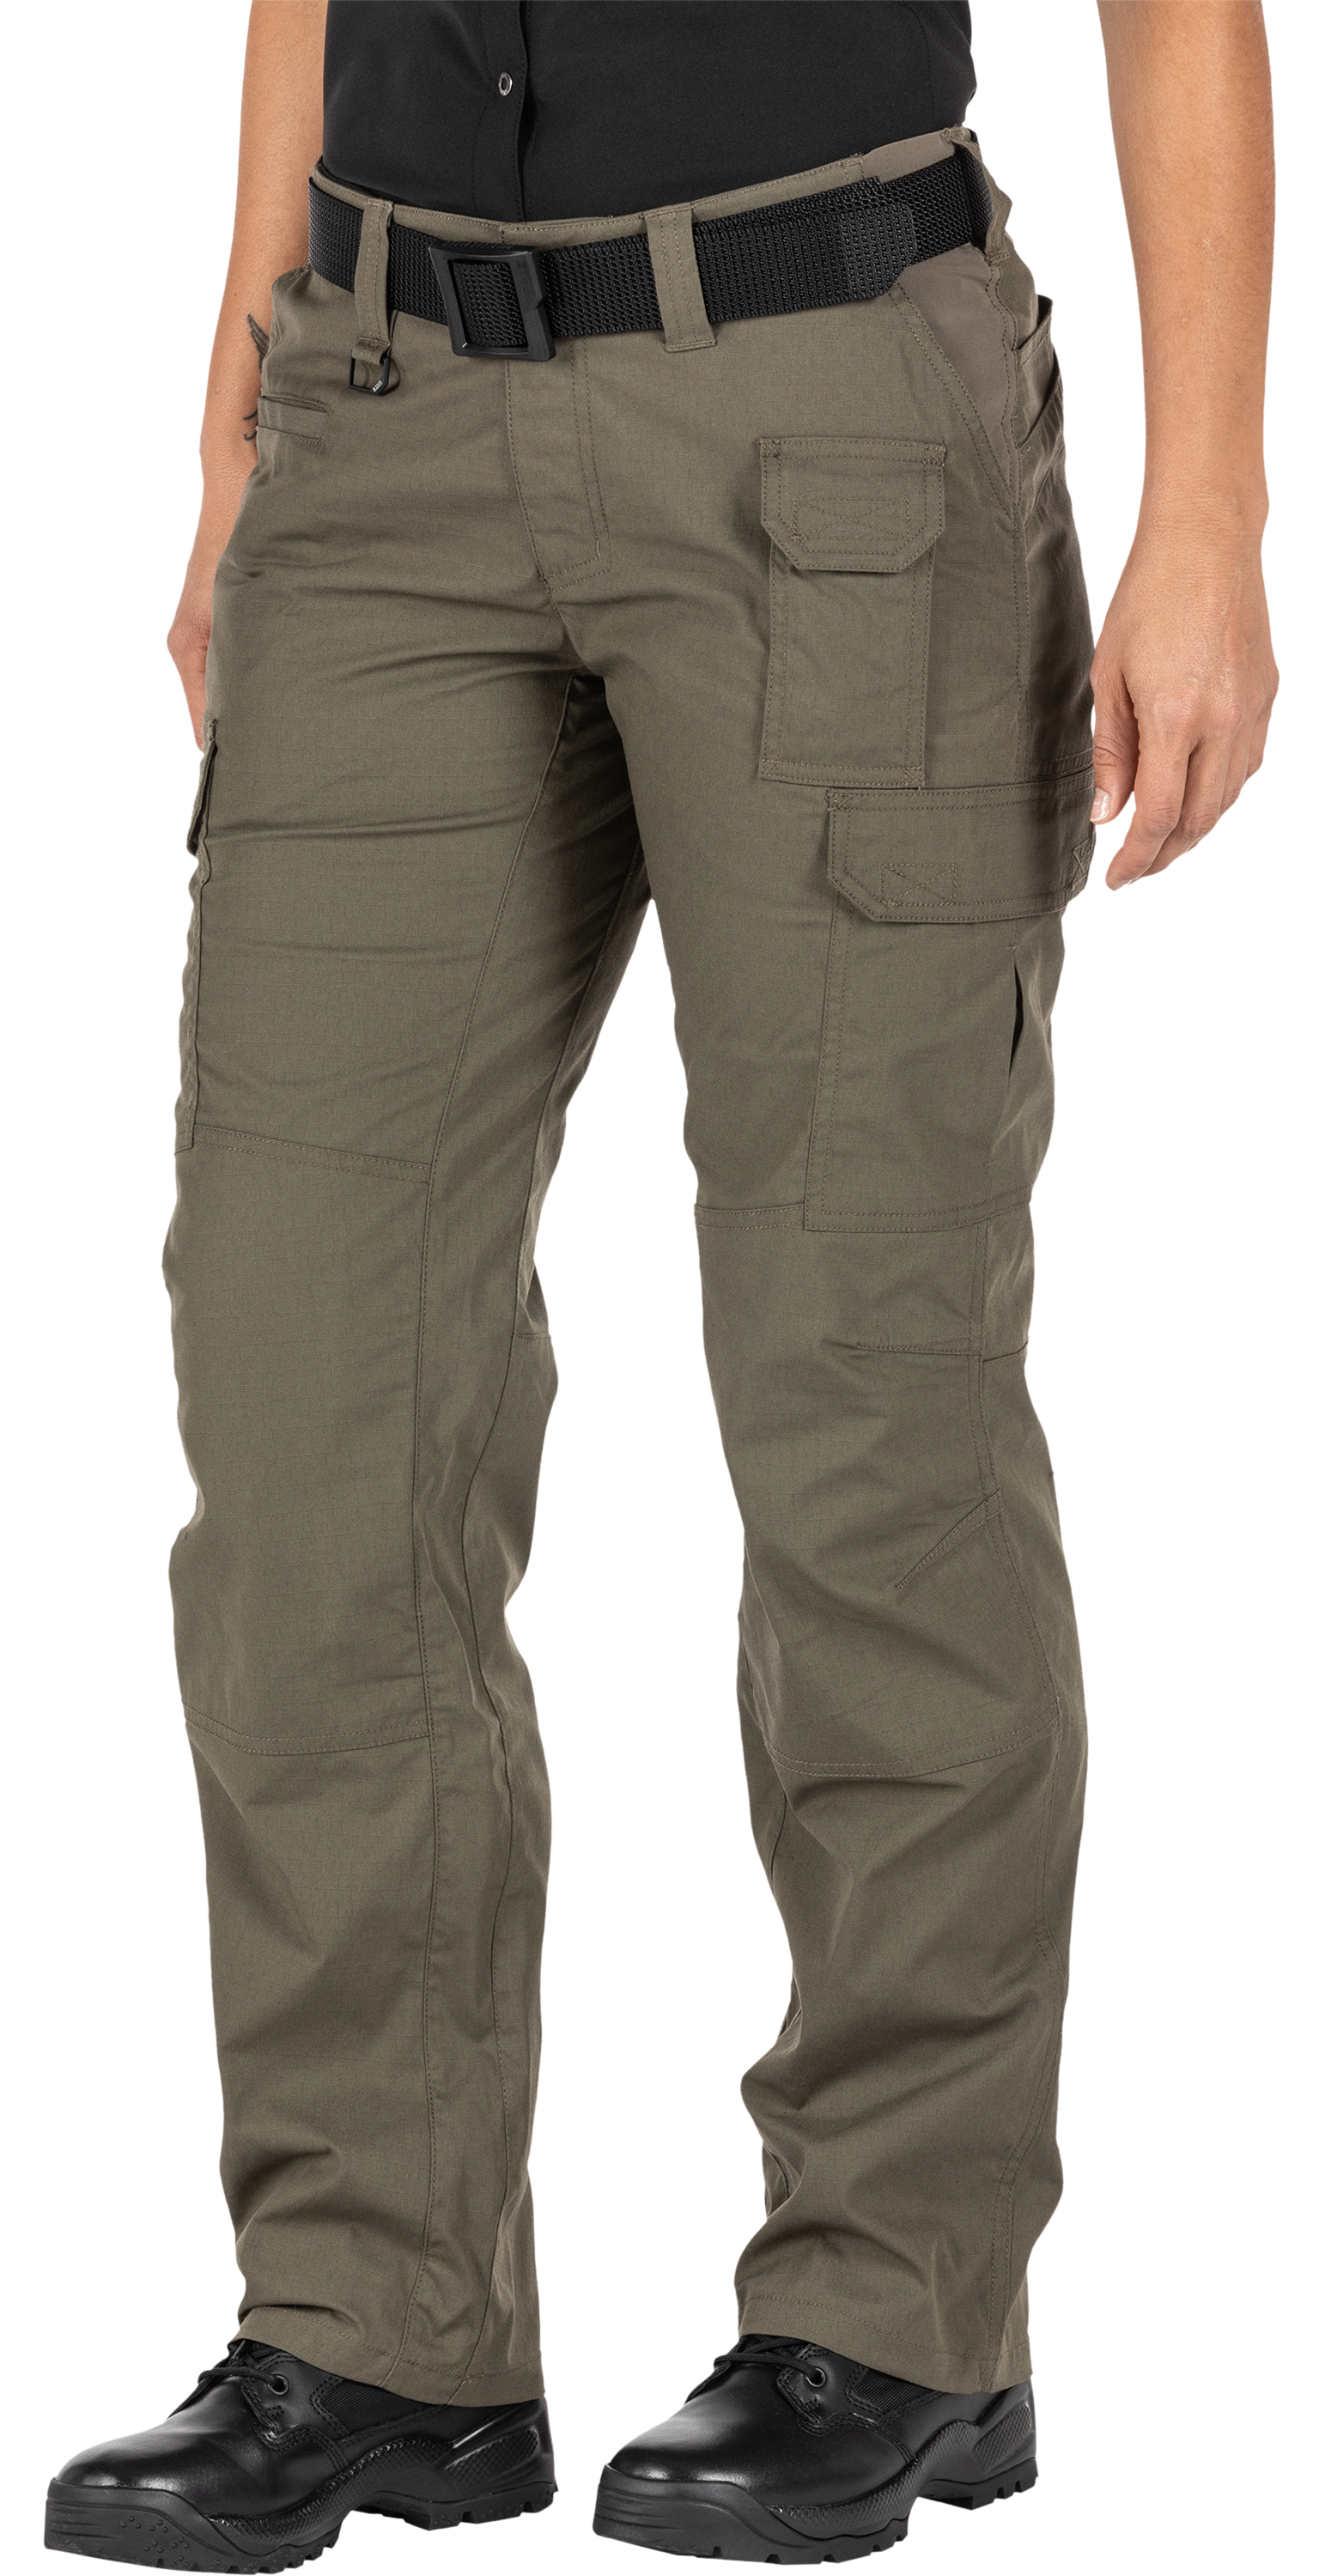 Women's Tactical Pants - Cargo Tactical Pants Designed For Women